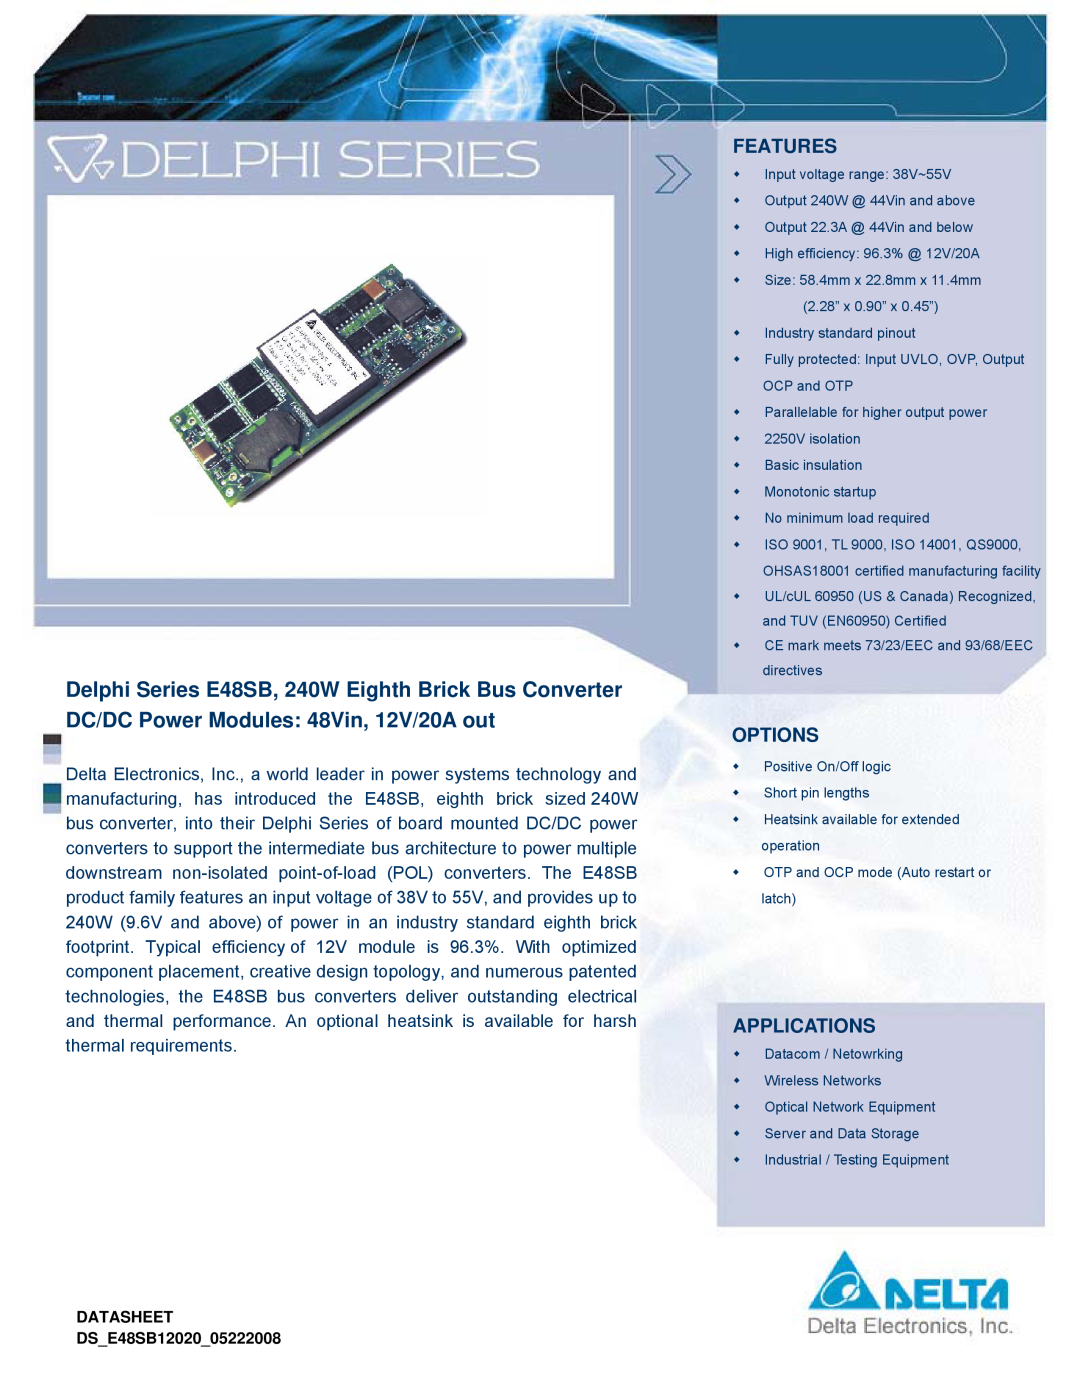 Delta Electronics Series 240W manual Features, Options, Applications, DATASHEET DSE48SB1202005222008 